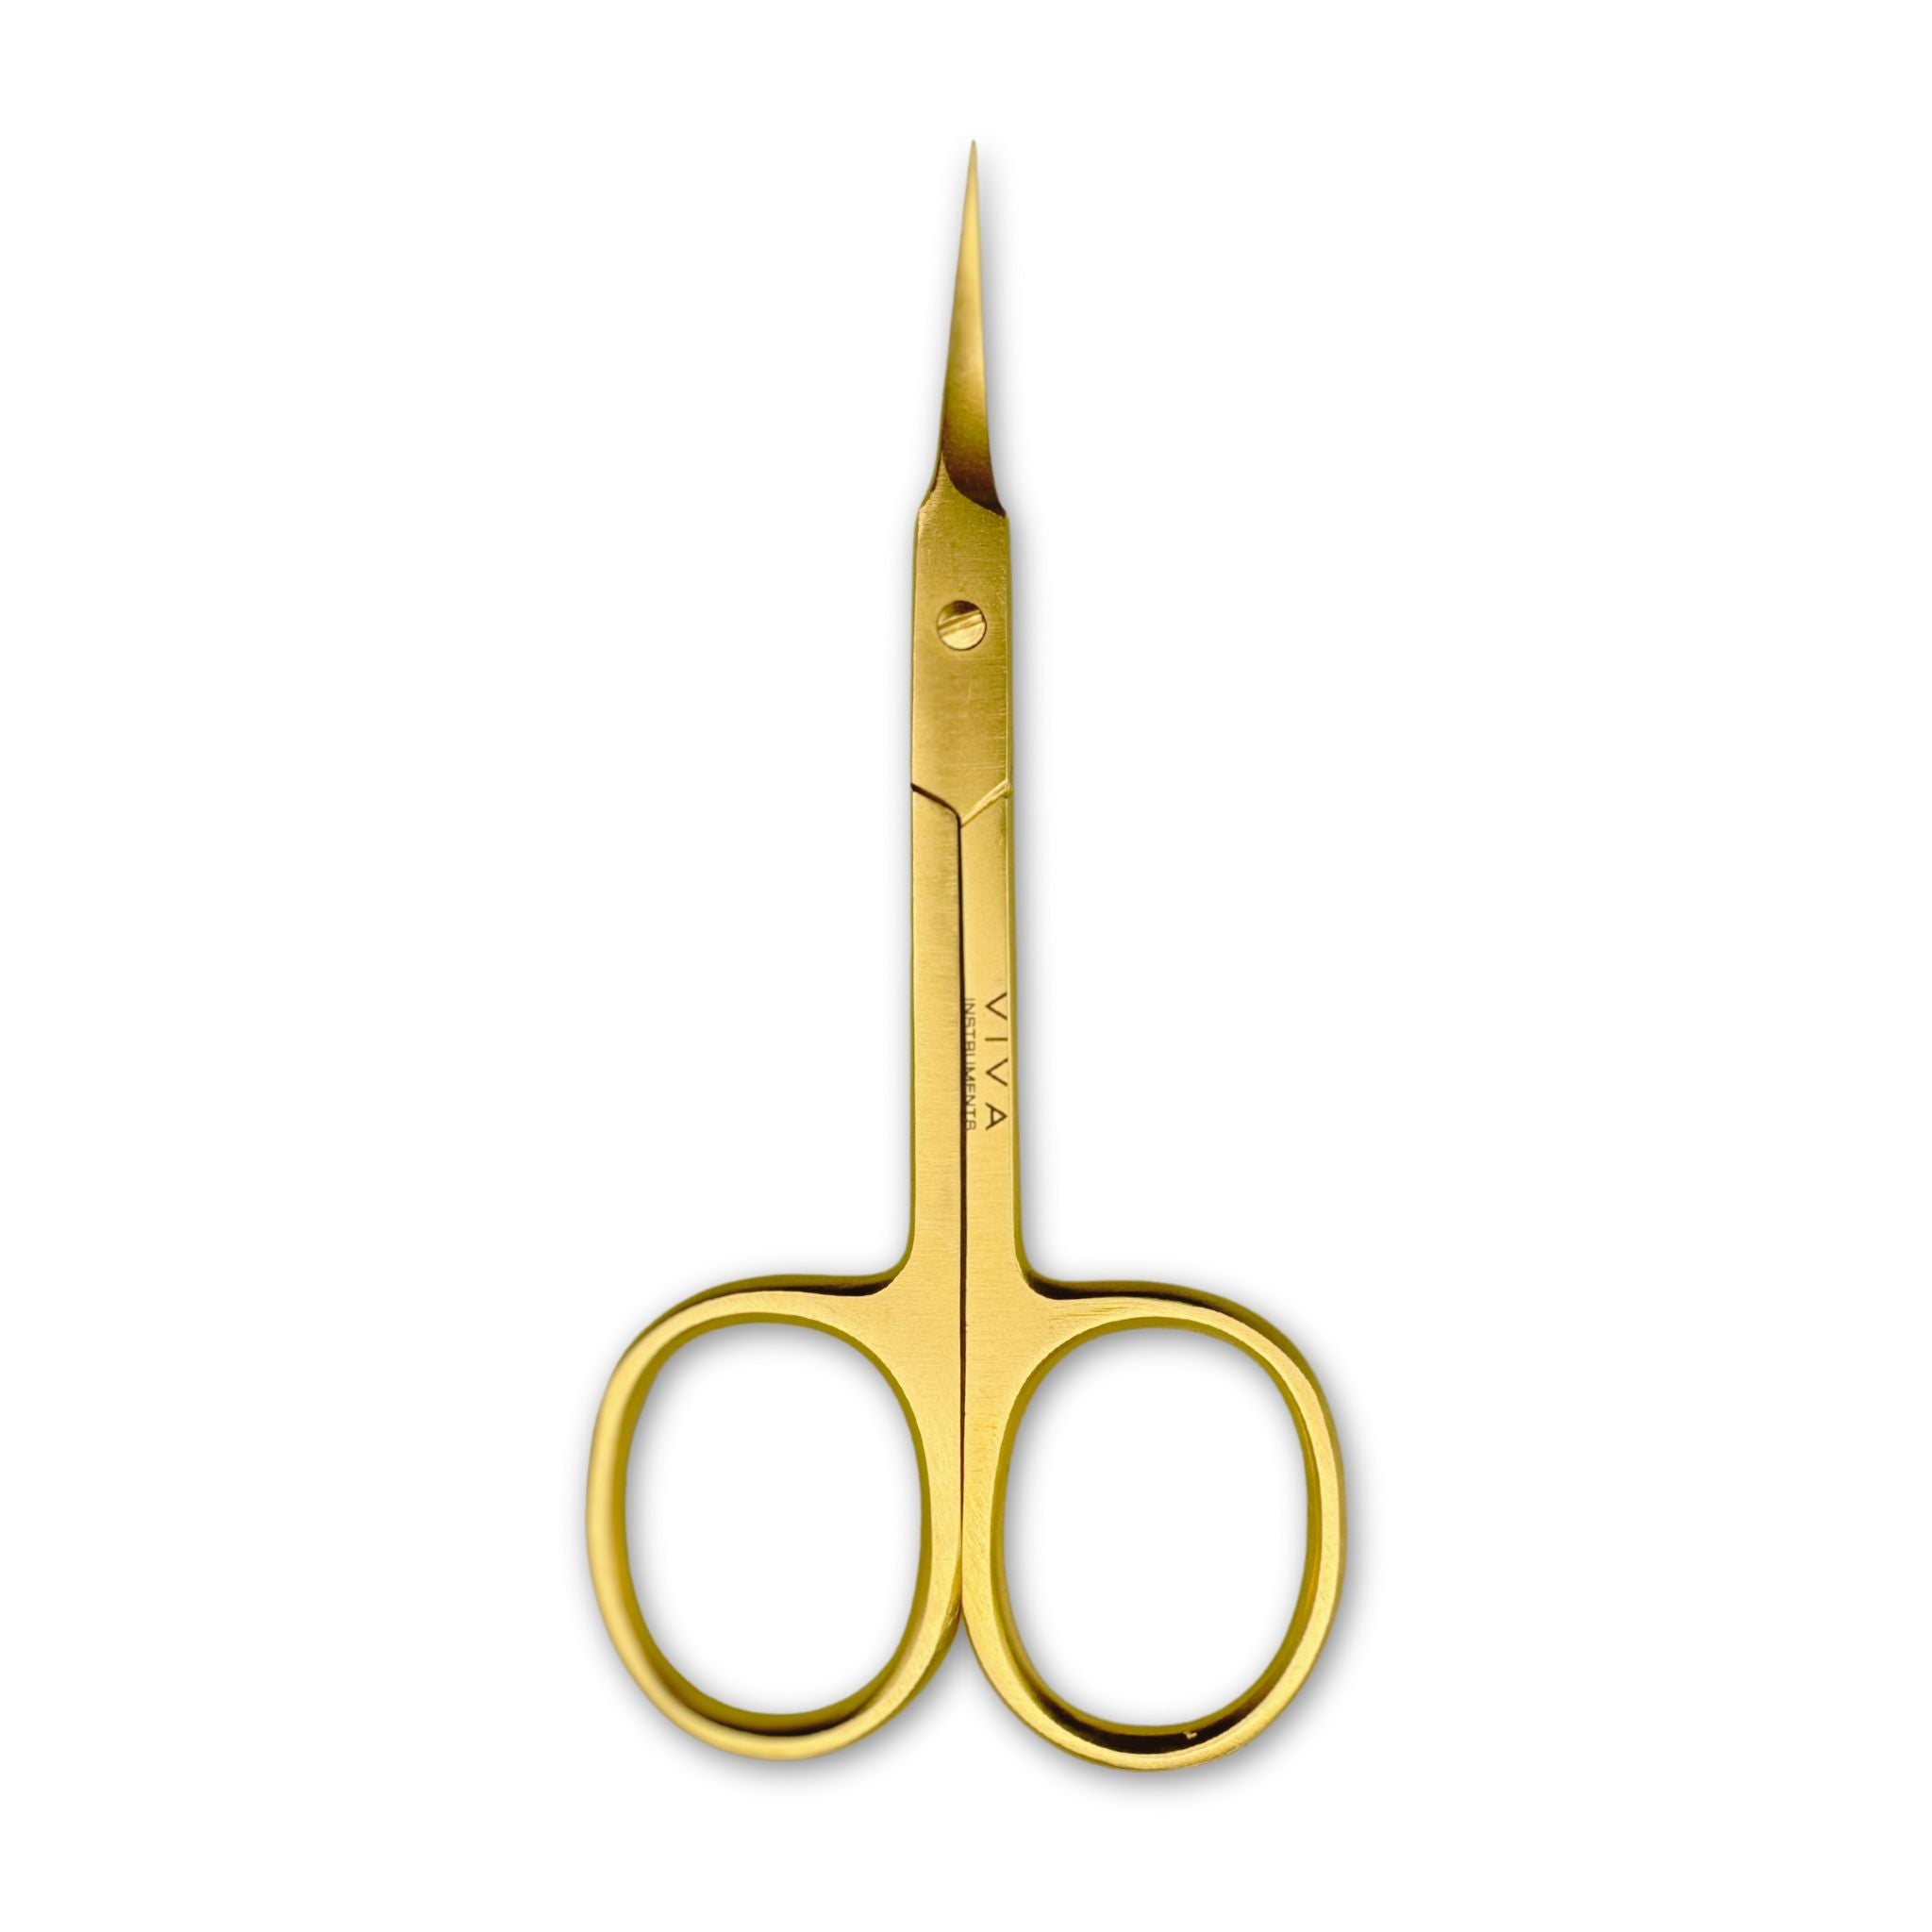 cuticle scissors professional manicure tools - viva instruments